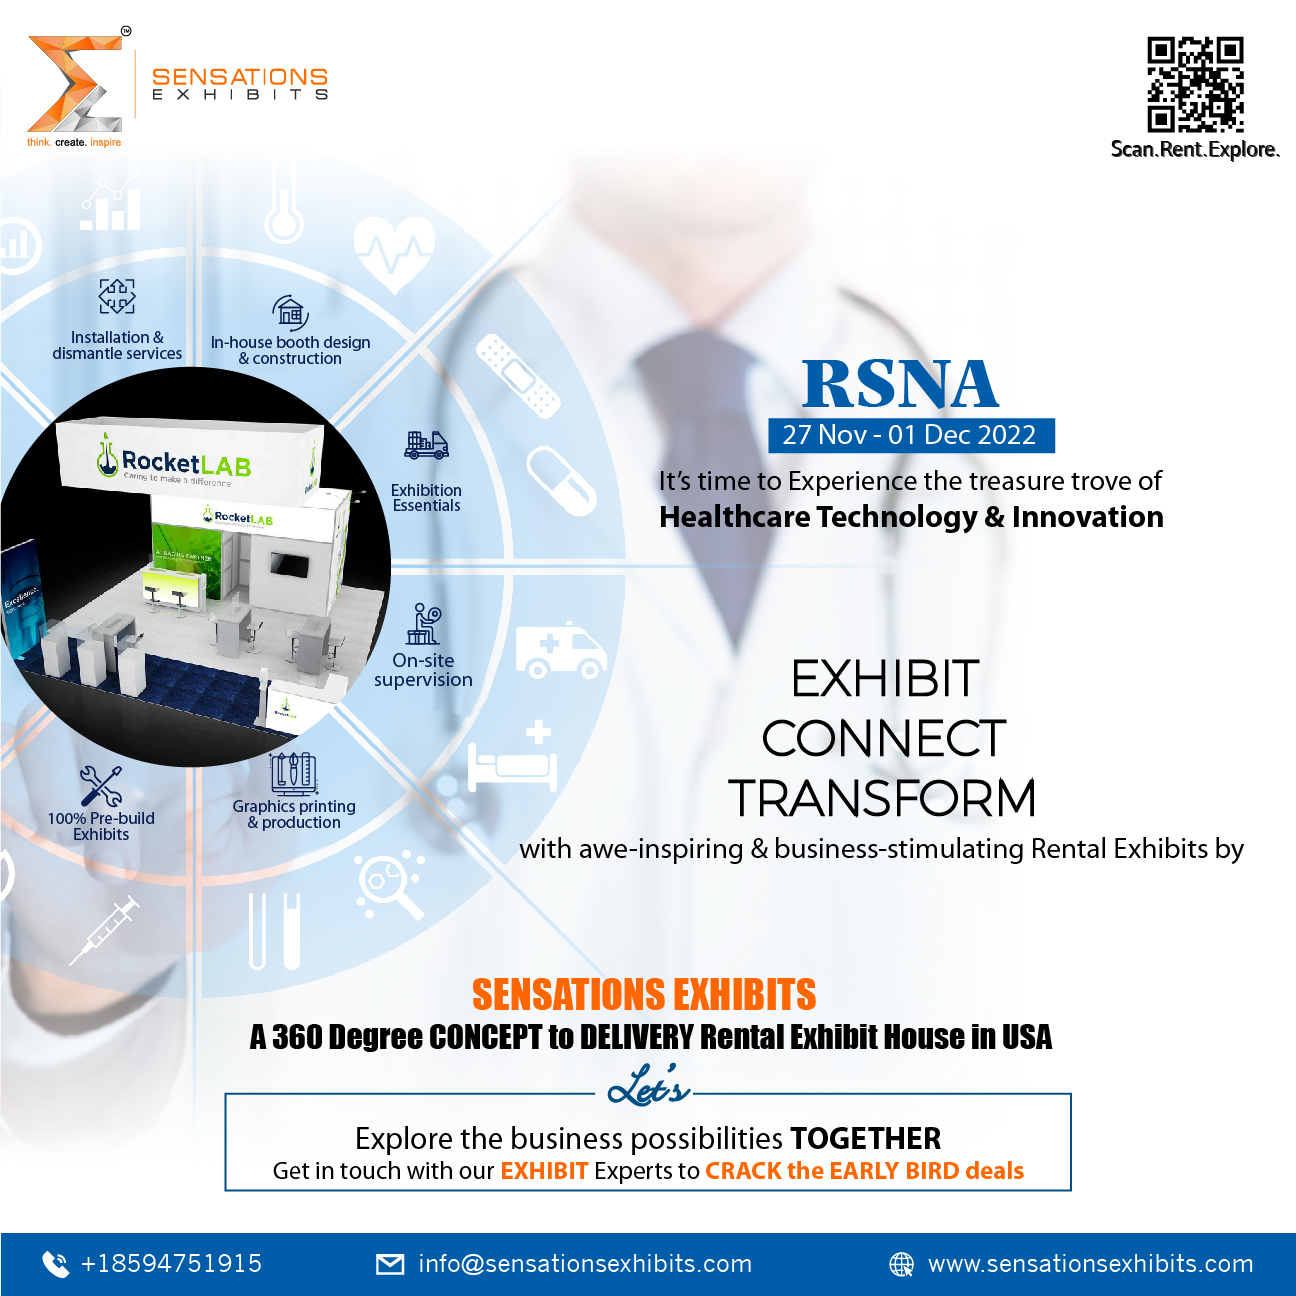 Participate In RSNA 2022 Trade Show event With Sensations Exhibits, Chicago, IL 60616,Illinois,United States